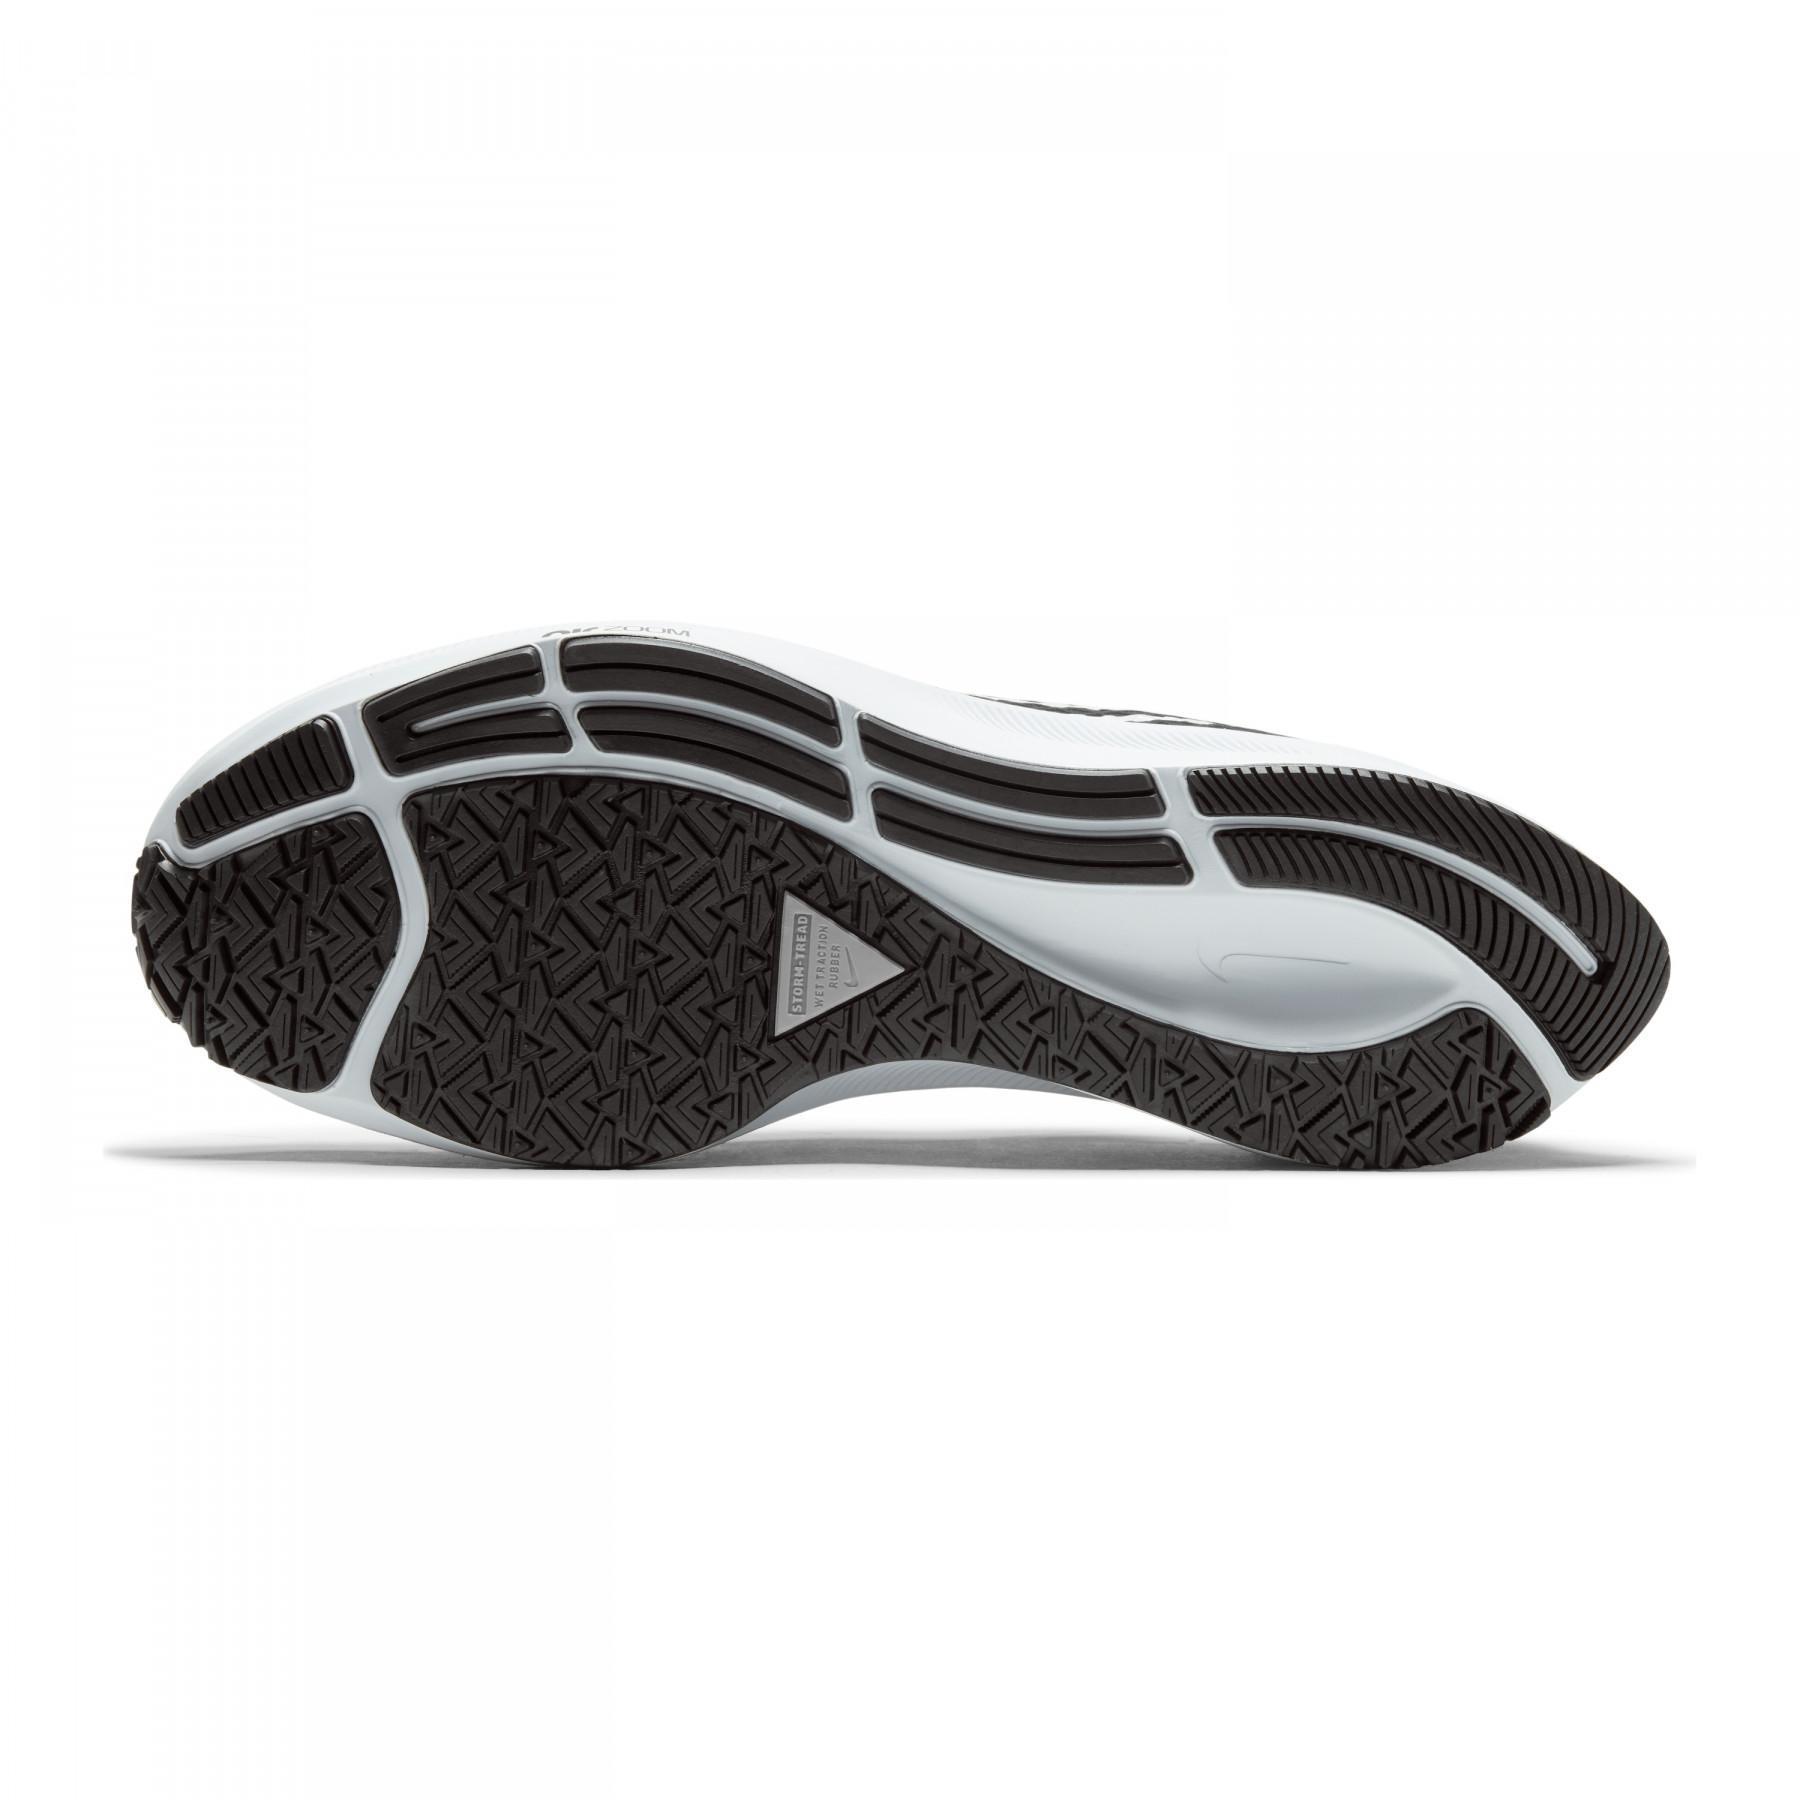 Chaussures de running Nike Air Zoom Pegasus 37 Shield